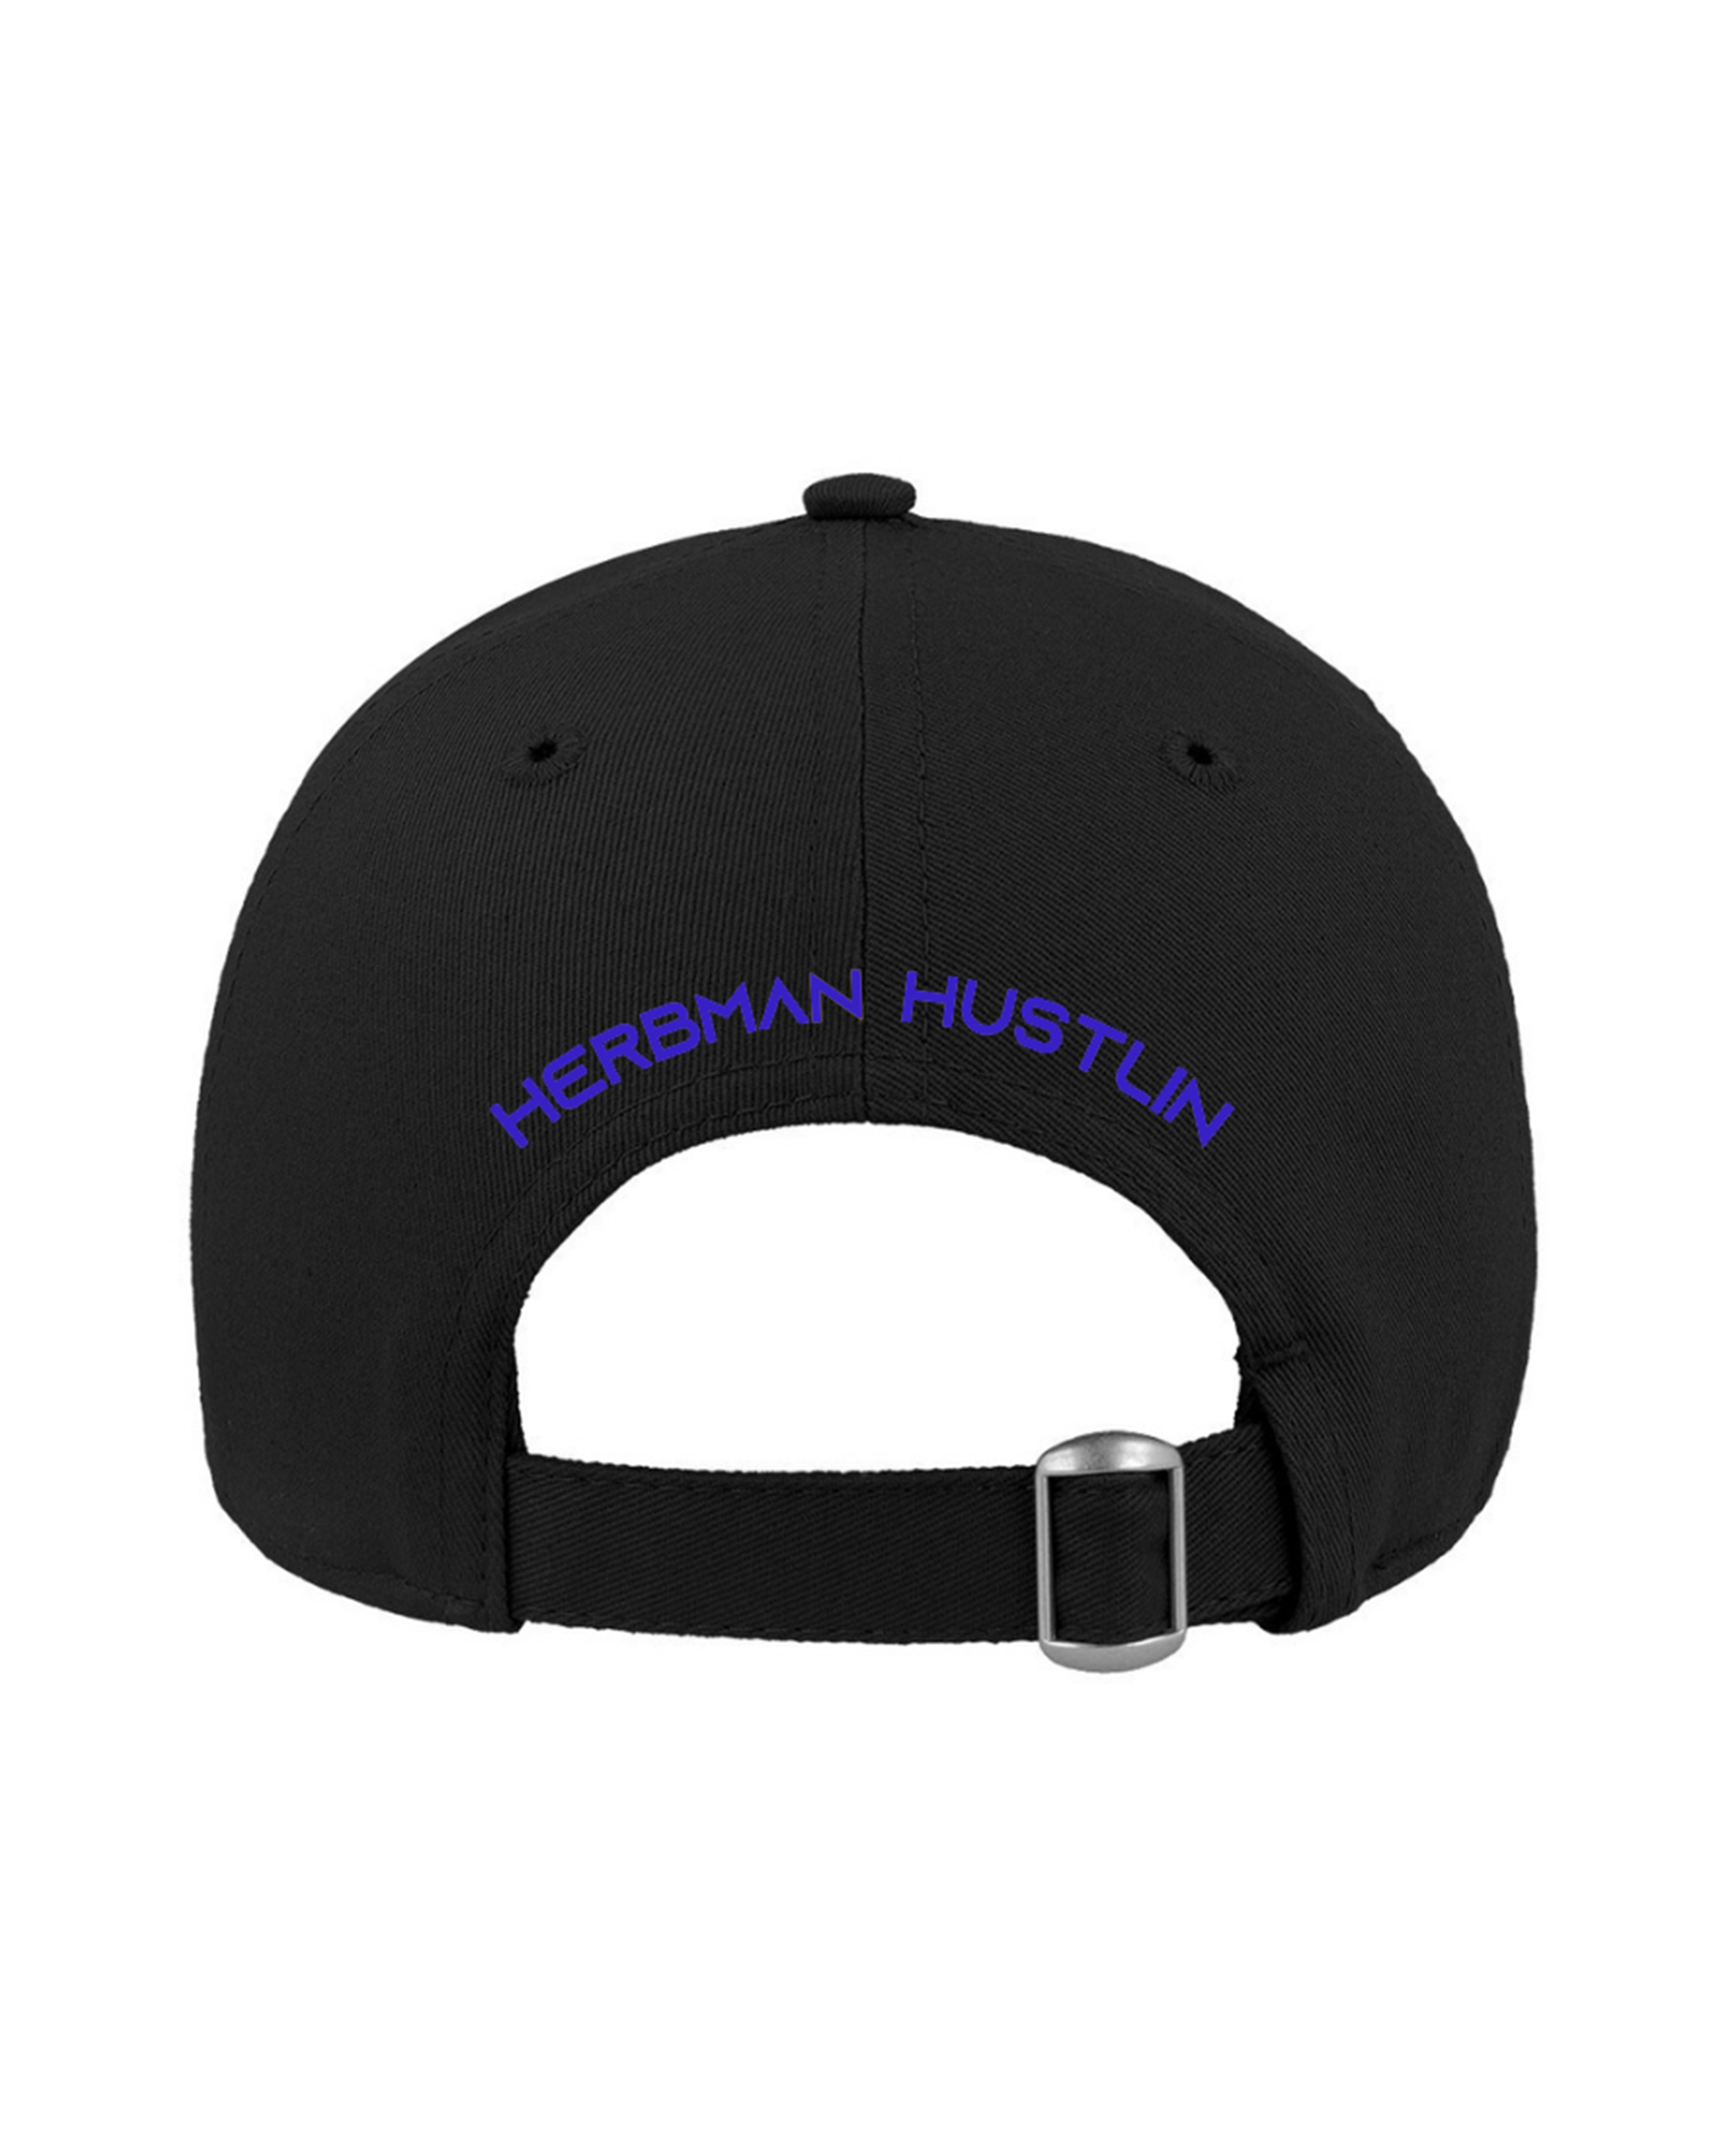 Herbman Hustlin Monogram Cap - Black/Cobalt Blue